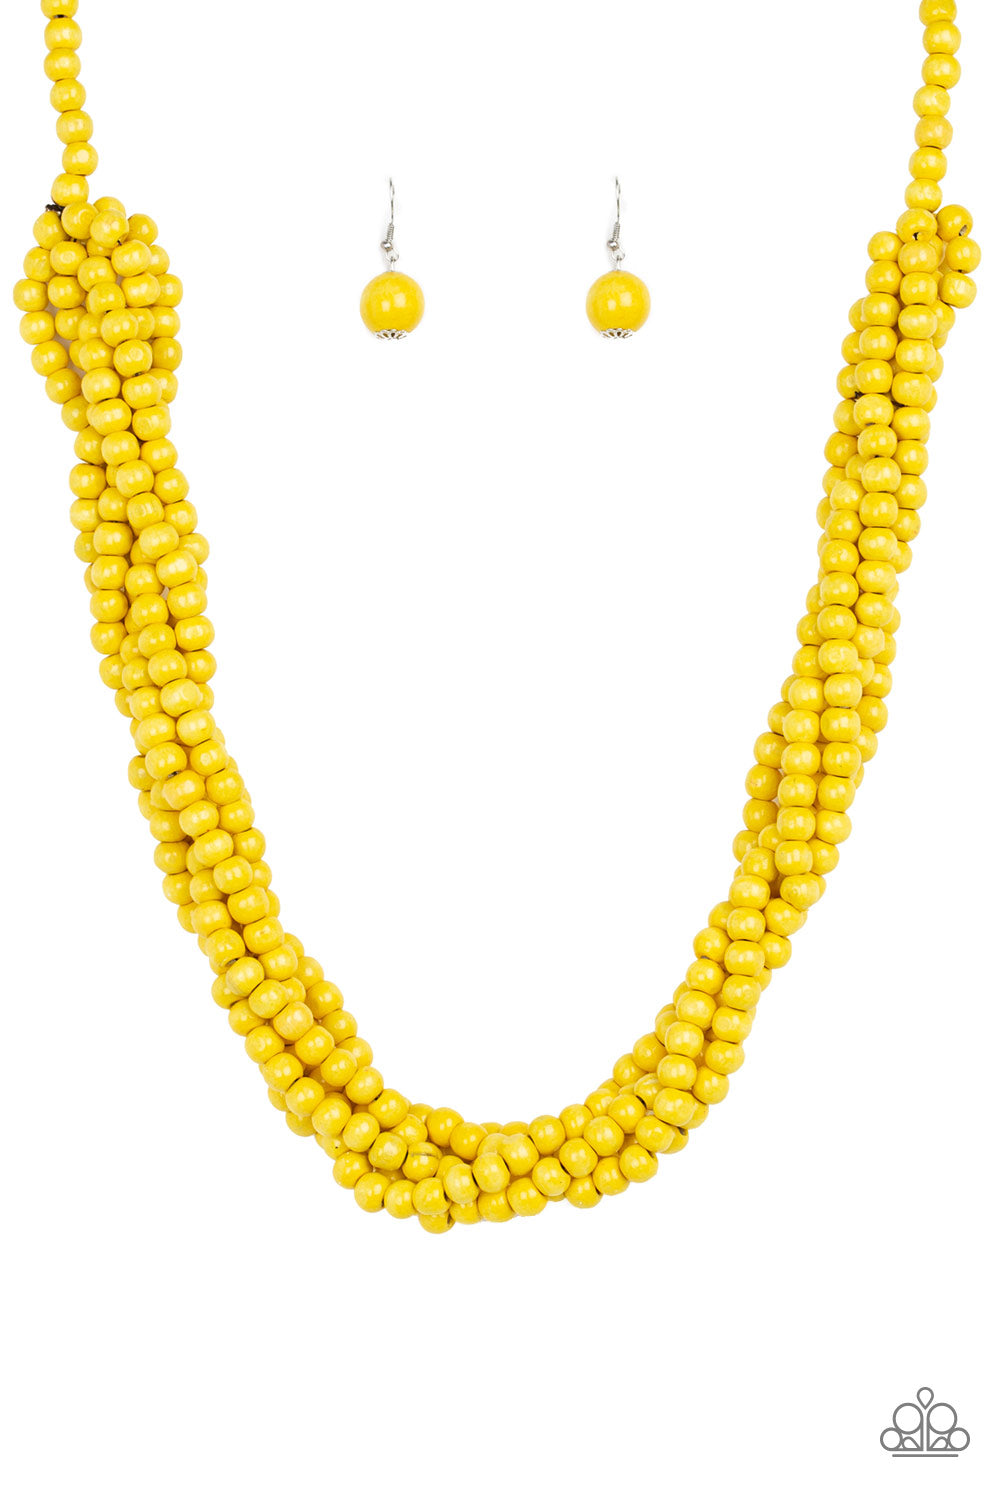 Tahiti Tropic Yellow Paparazzi Necklaces Cashmere Pink Jewels - Cashmere Pink Jewels & Accessories, Cashmere Pink Jewels & Accessories - Paparazzi